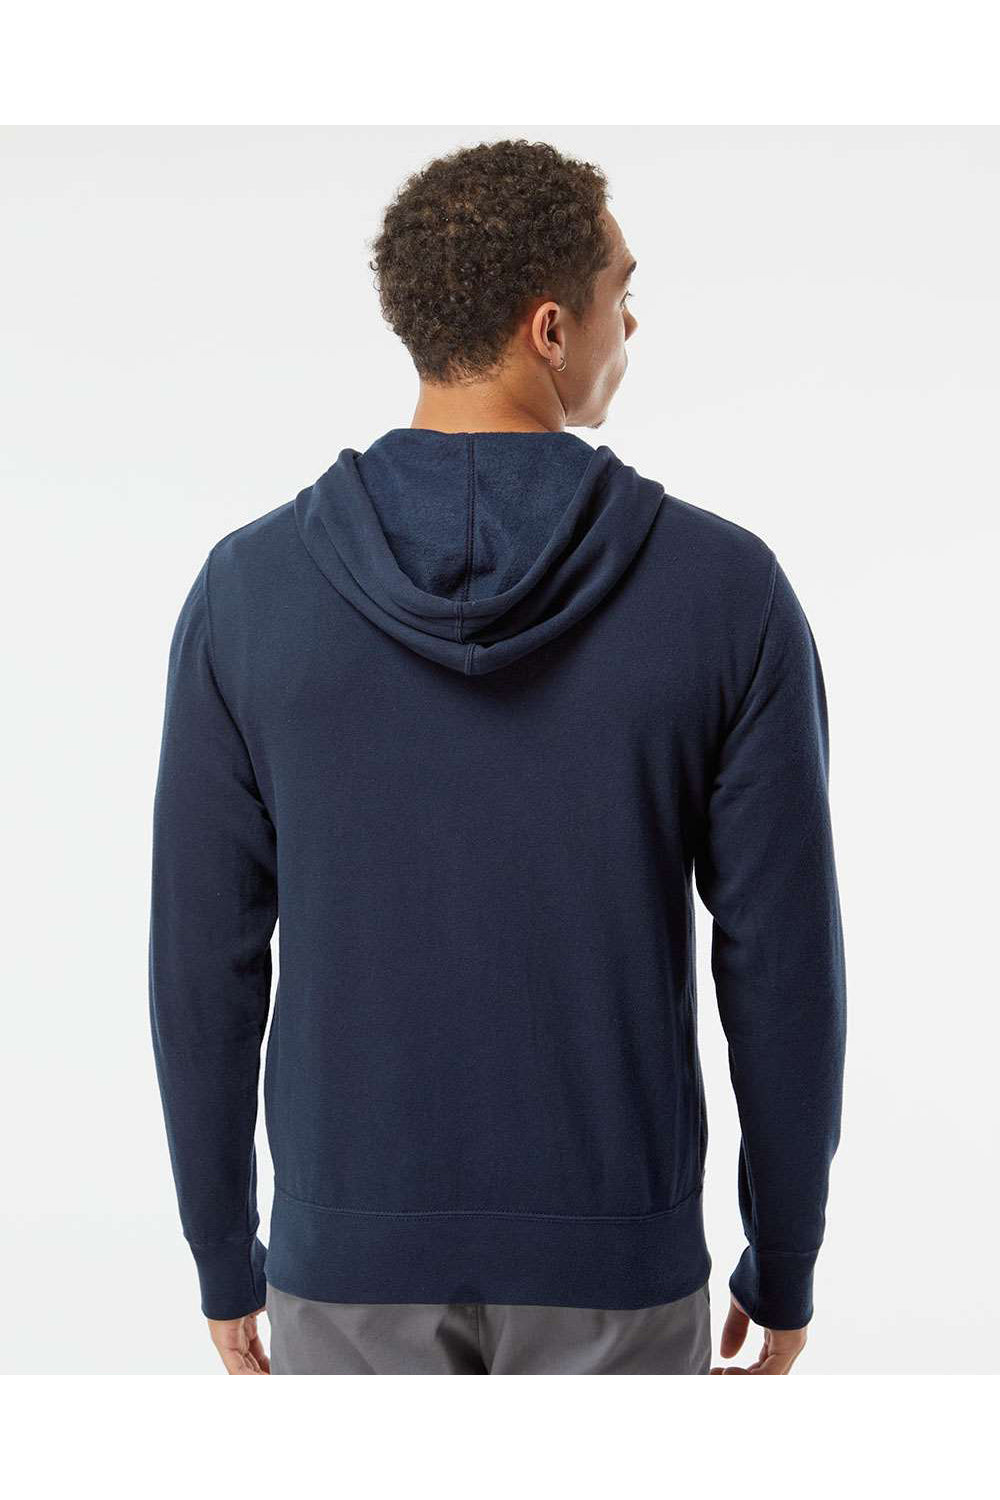 Independent Trading Co. AFX90UNZ Mens Full Zip Hooded Sweatshirt Hoodie Classic Navy Blue Model Back